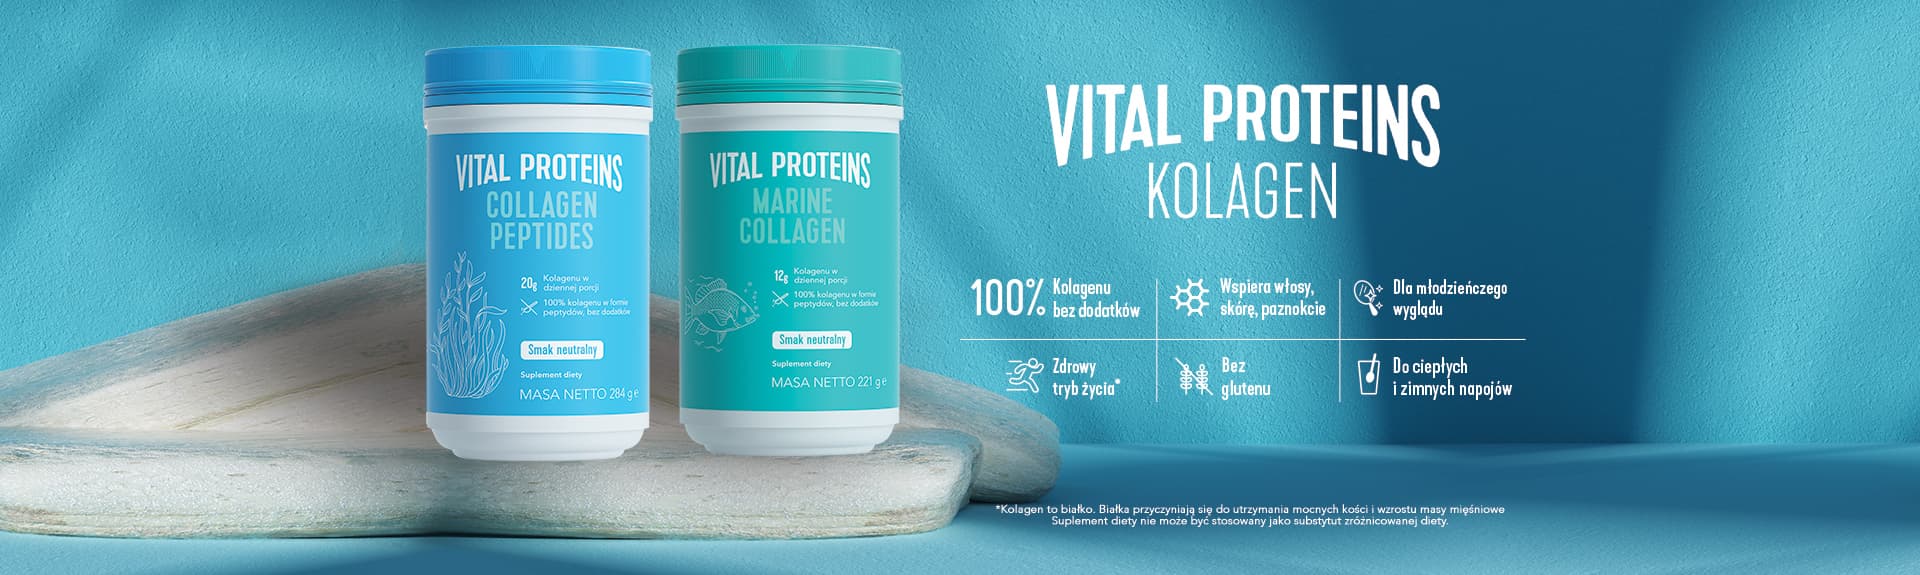 Vital Proteins Kolagen